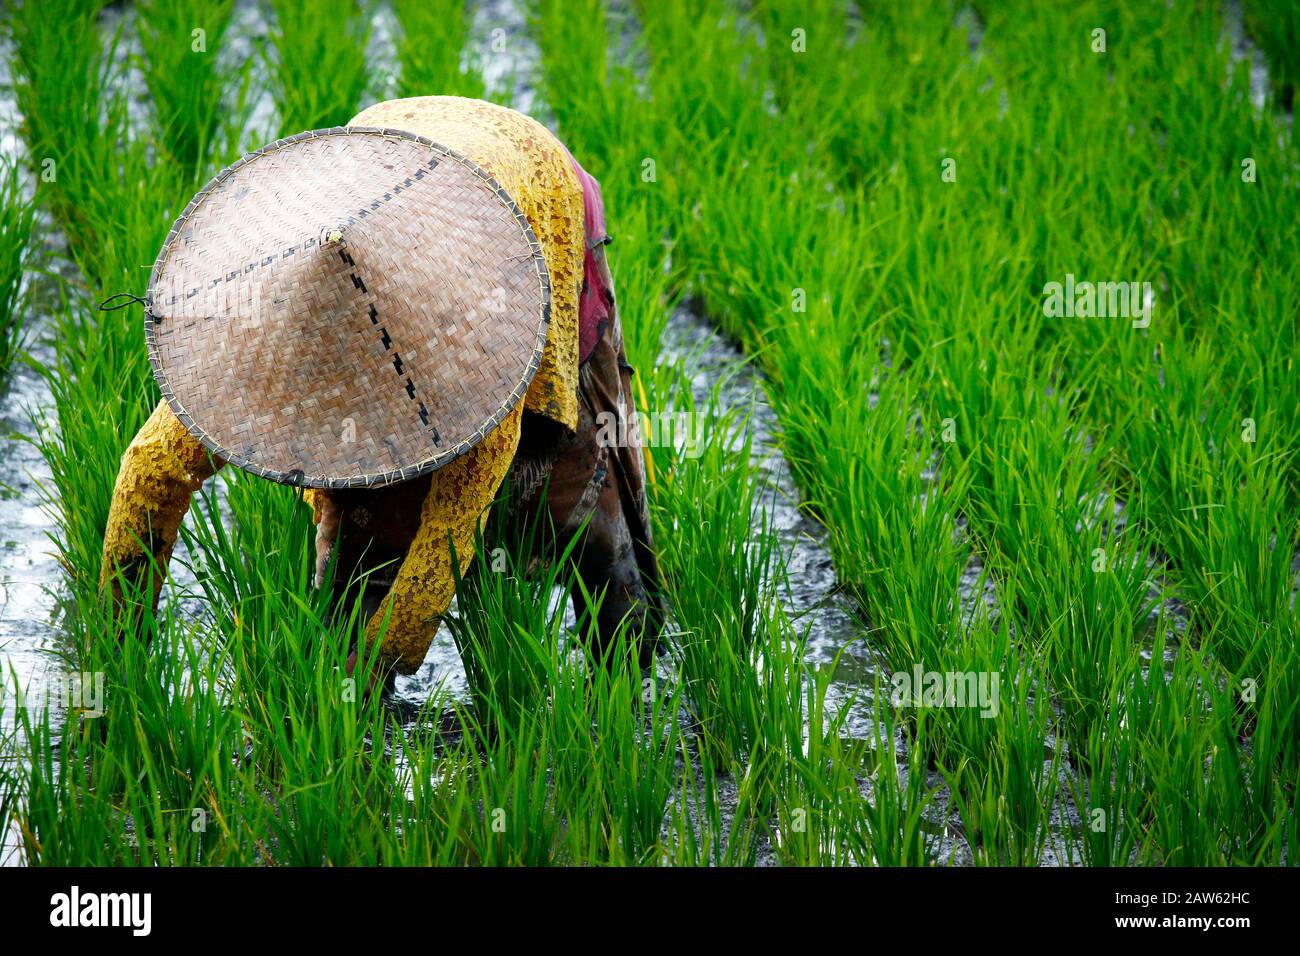 Reisfeldarbeiter mit Bambushut, der das Reisfeld pflegt Stockfotografie -  Alamy